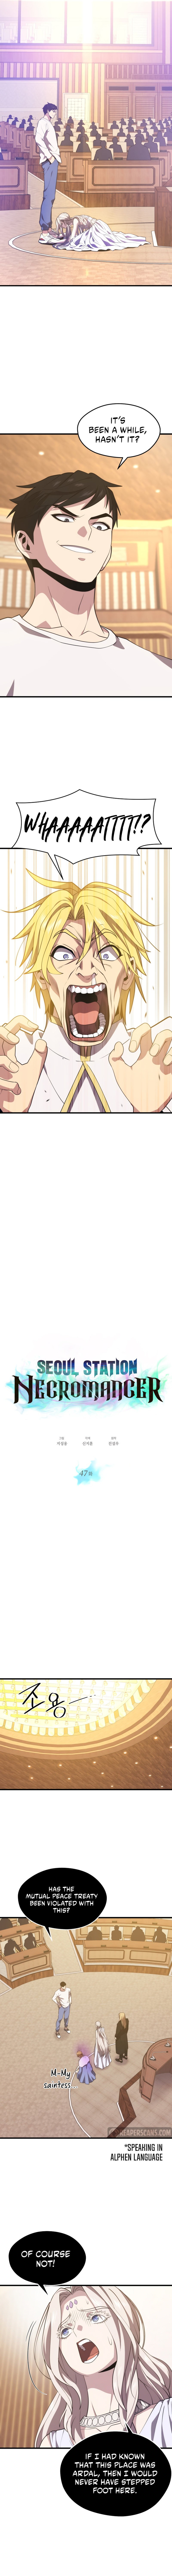 seoul-station-necromancer-chap-47-3